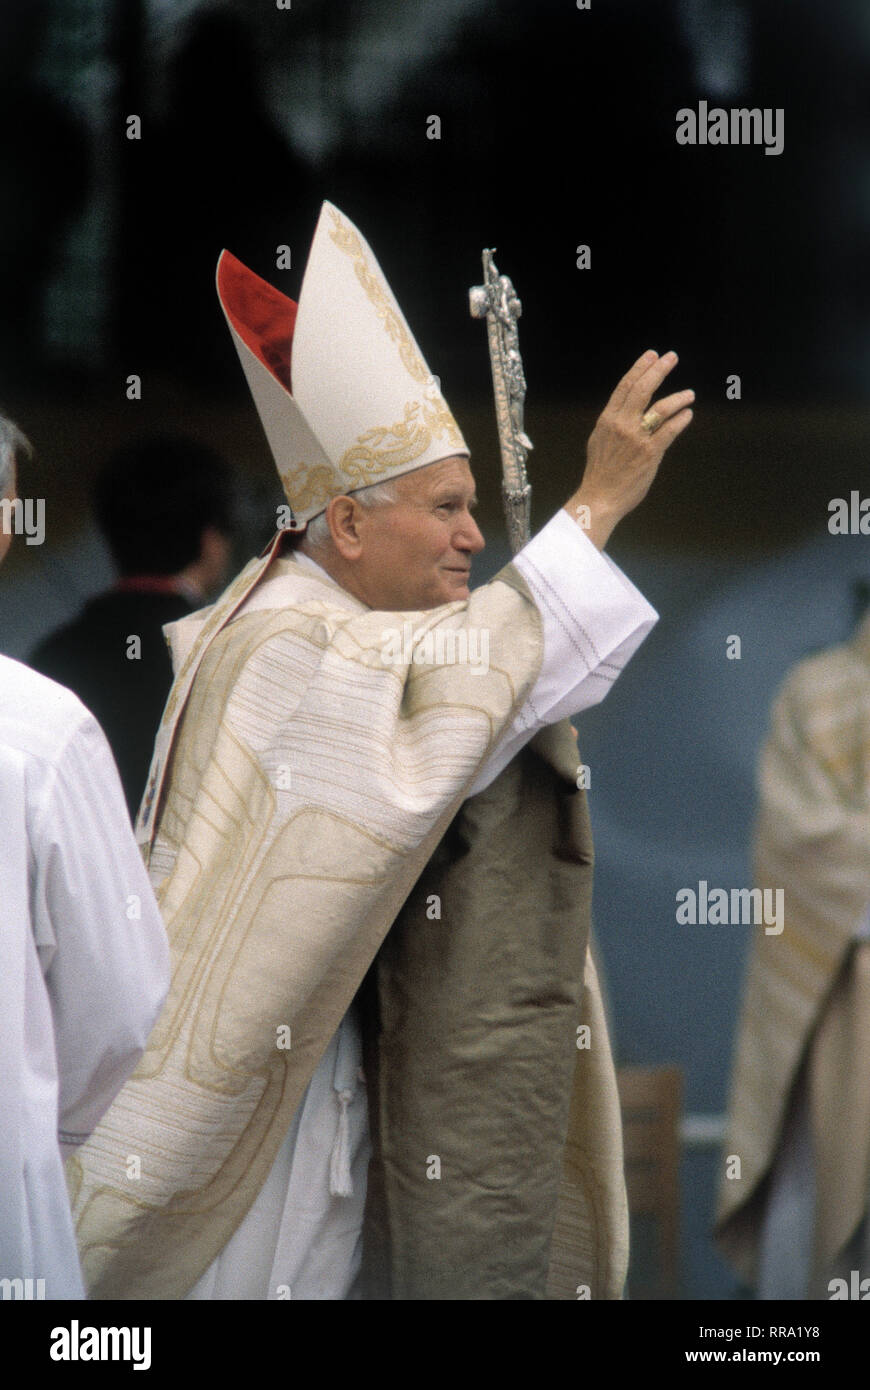 PAPST JOHANNES PAUL II / Papst Johannes Paul II mit Bischofsstab, München, 1987. / Überschrift: PAPST JOHANNES PAUL II Stock Photo